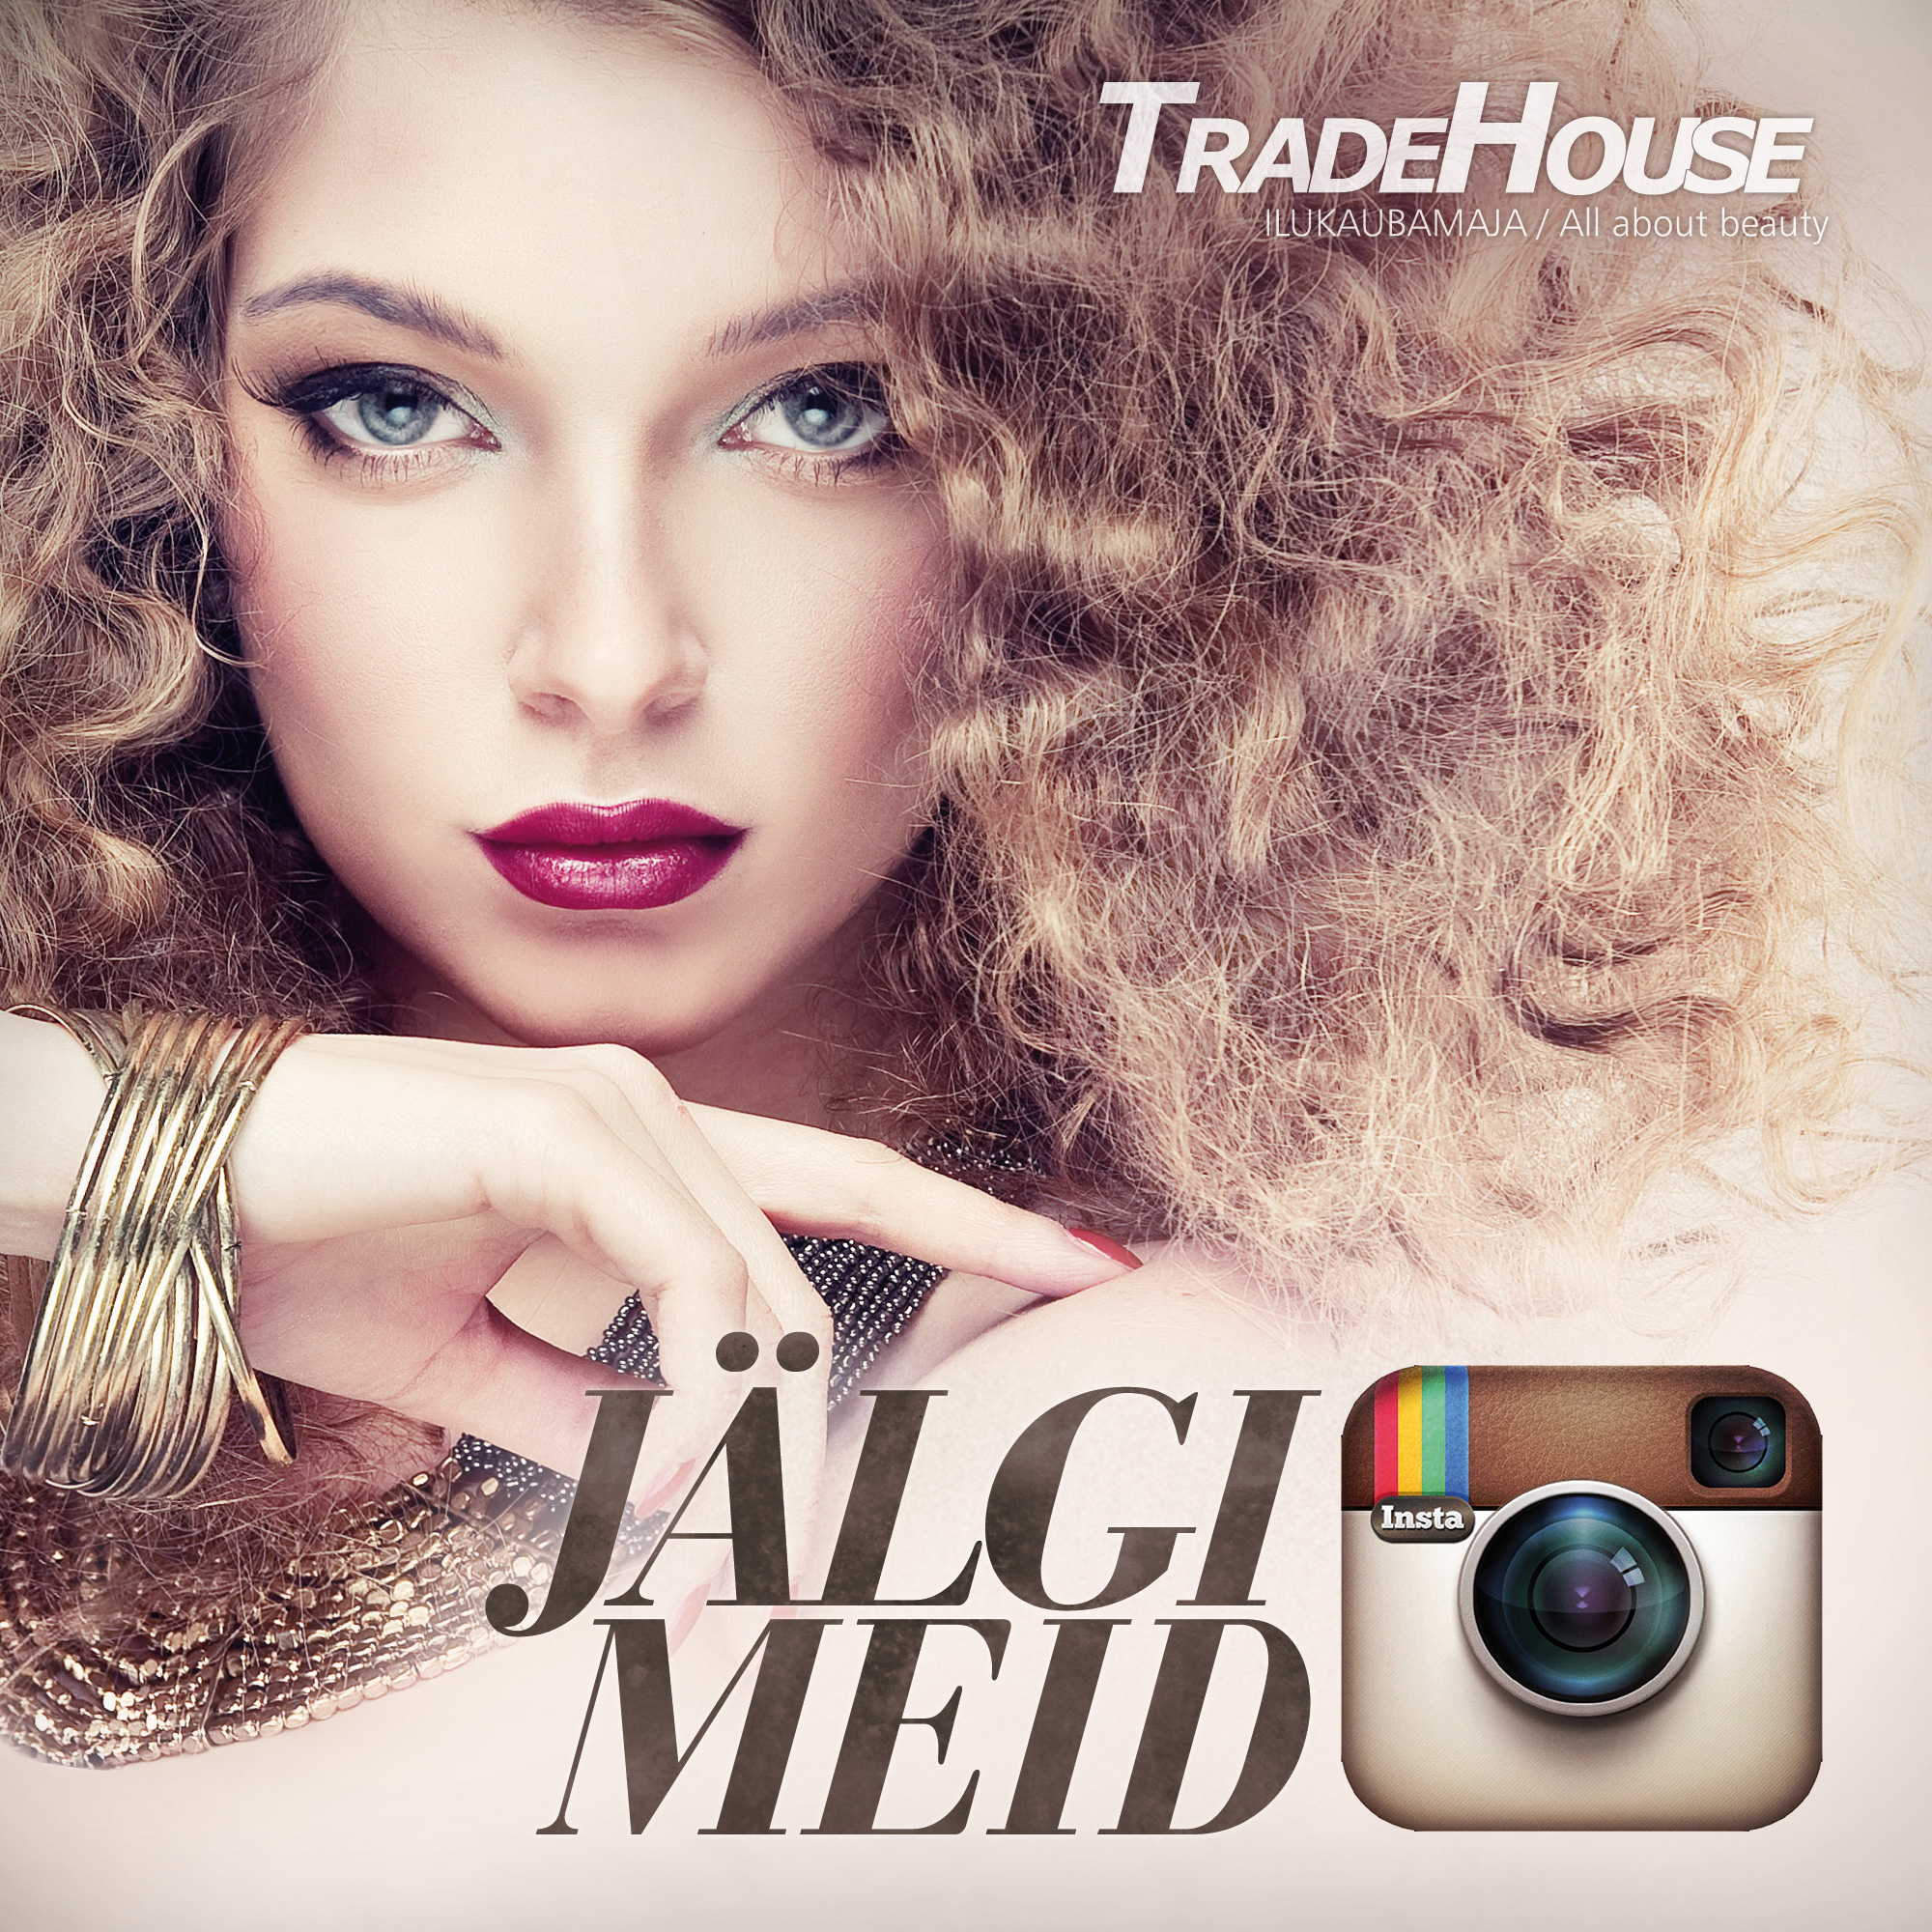 Tradehouse instagramis